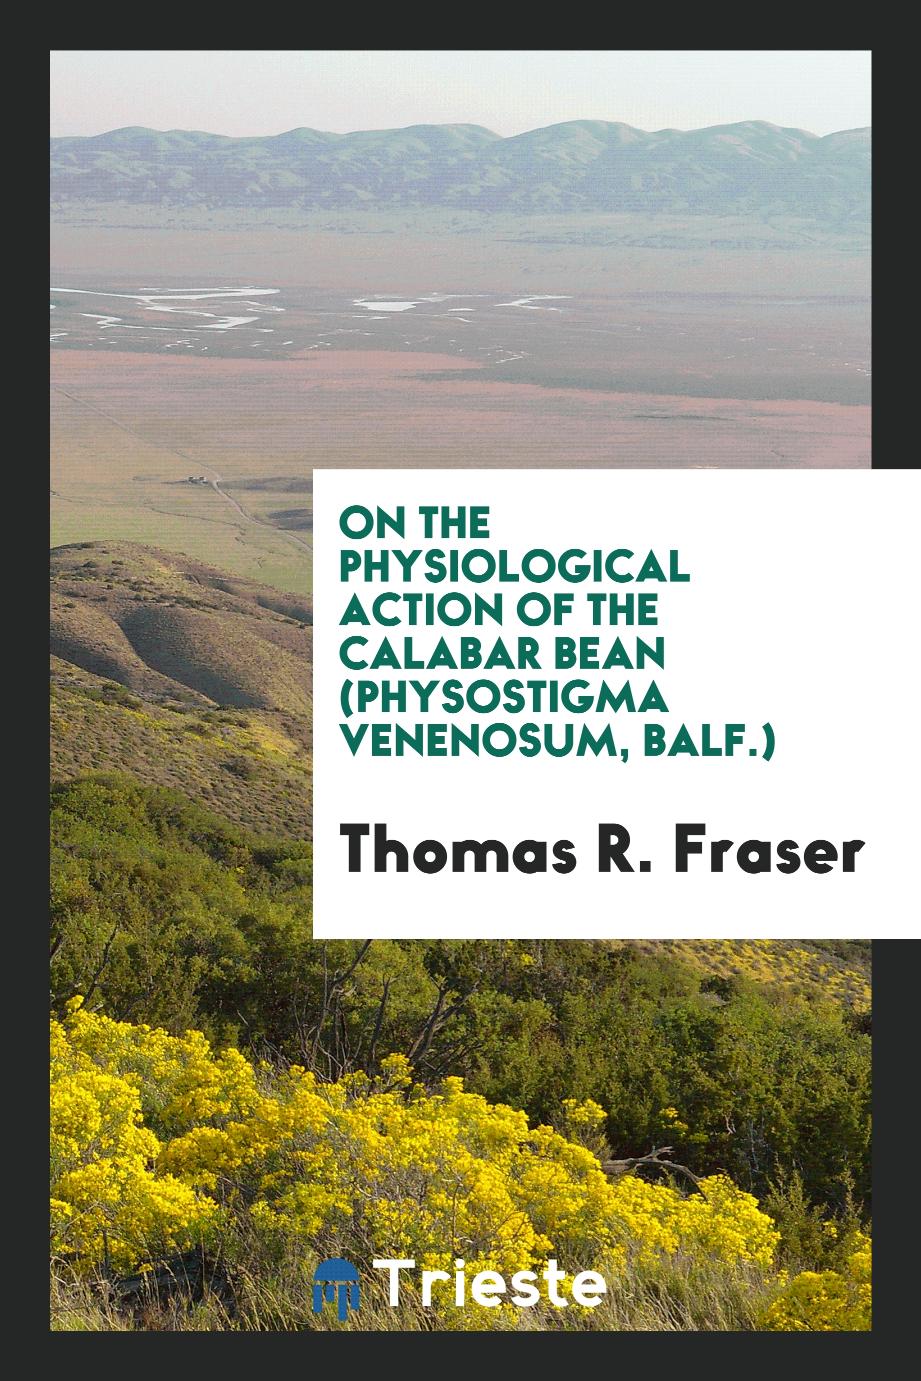 On the Physiological action of the calabar bean (physostigma venenosum, Balf.)